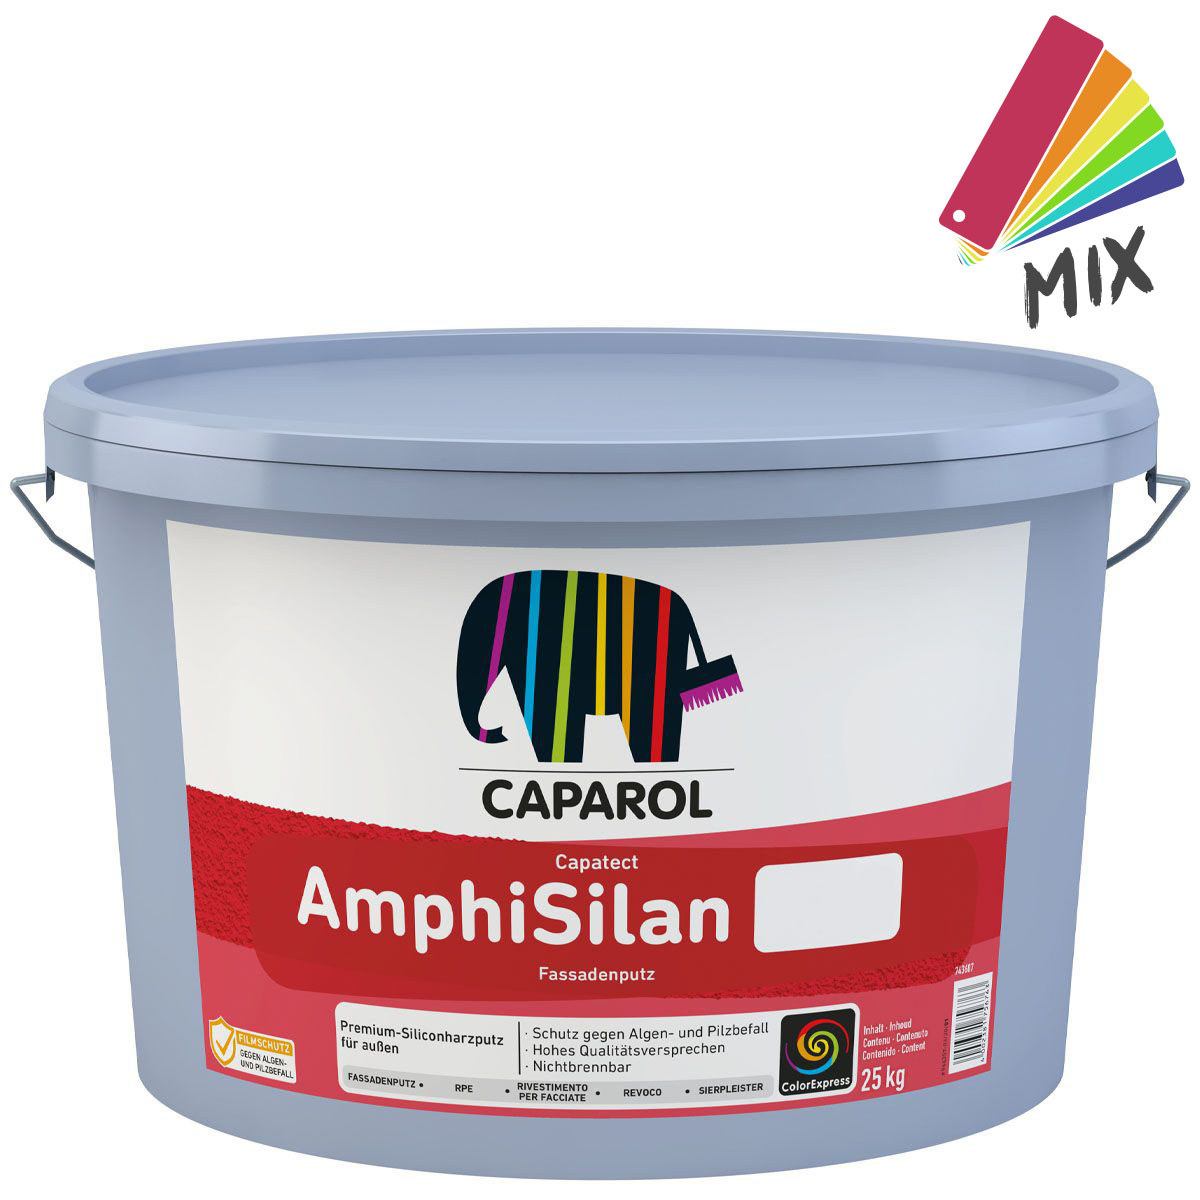 Caparol Capatect AmphiSilan Fassadenputz K30 (3mm) 25kg, PG B wunschfarbton